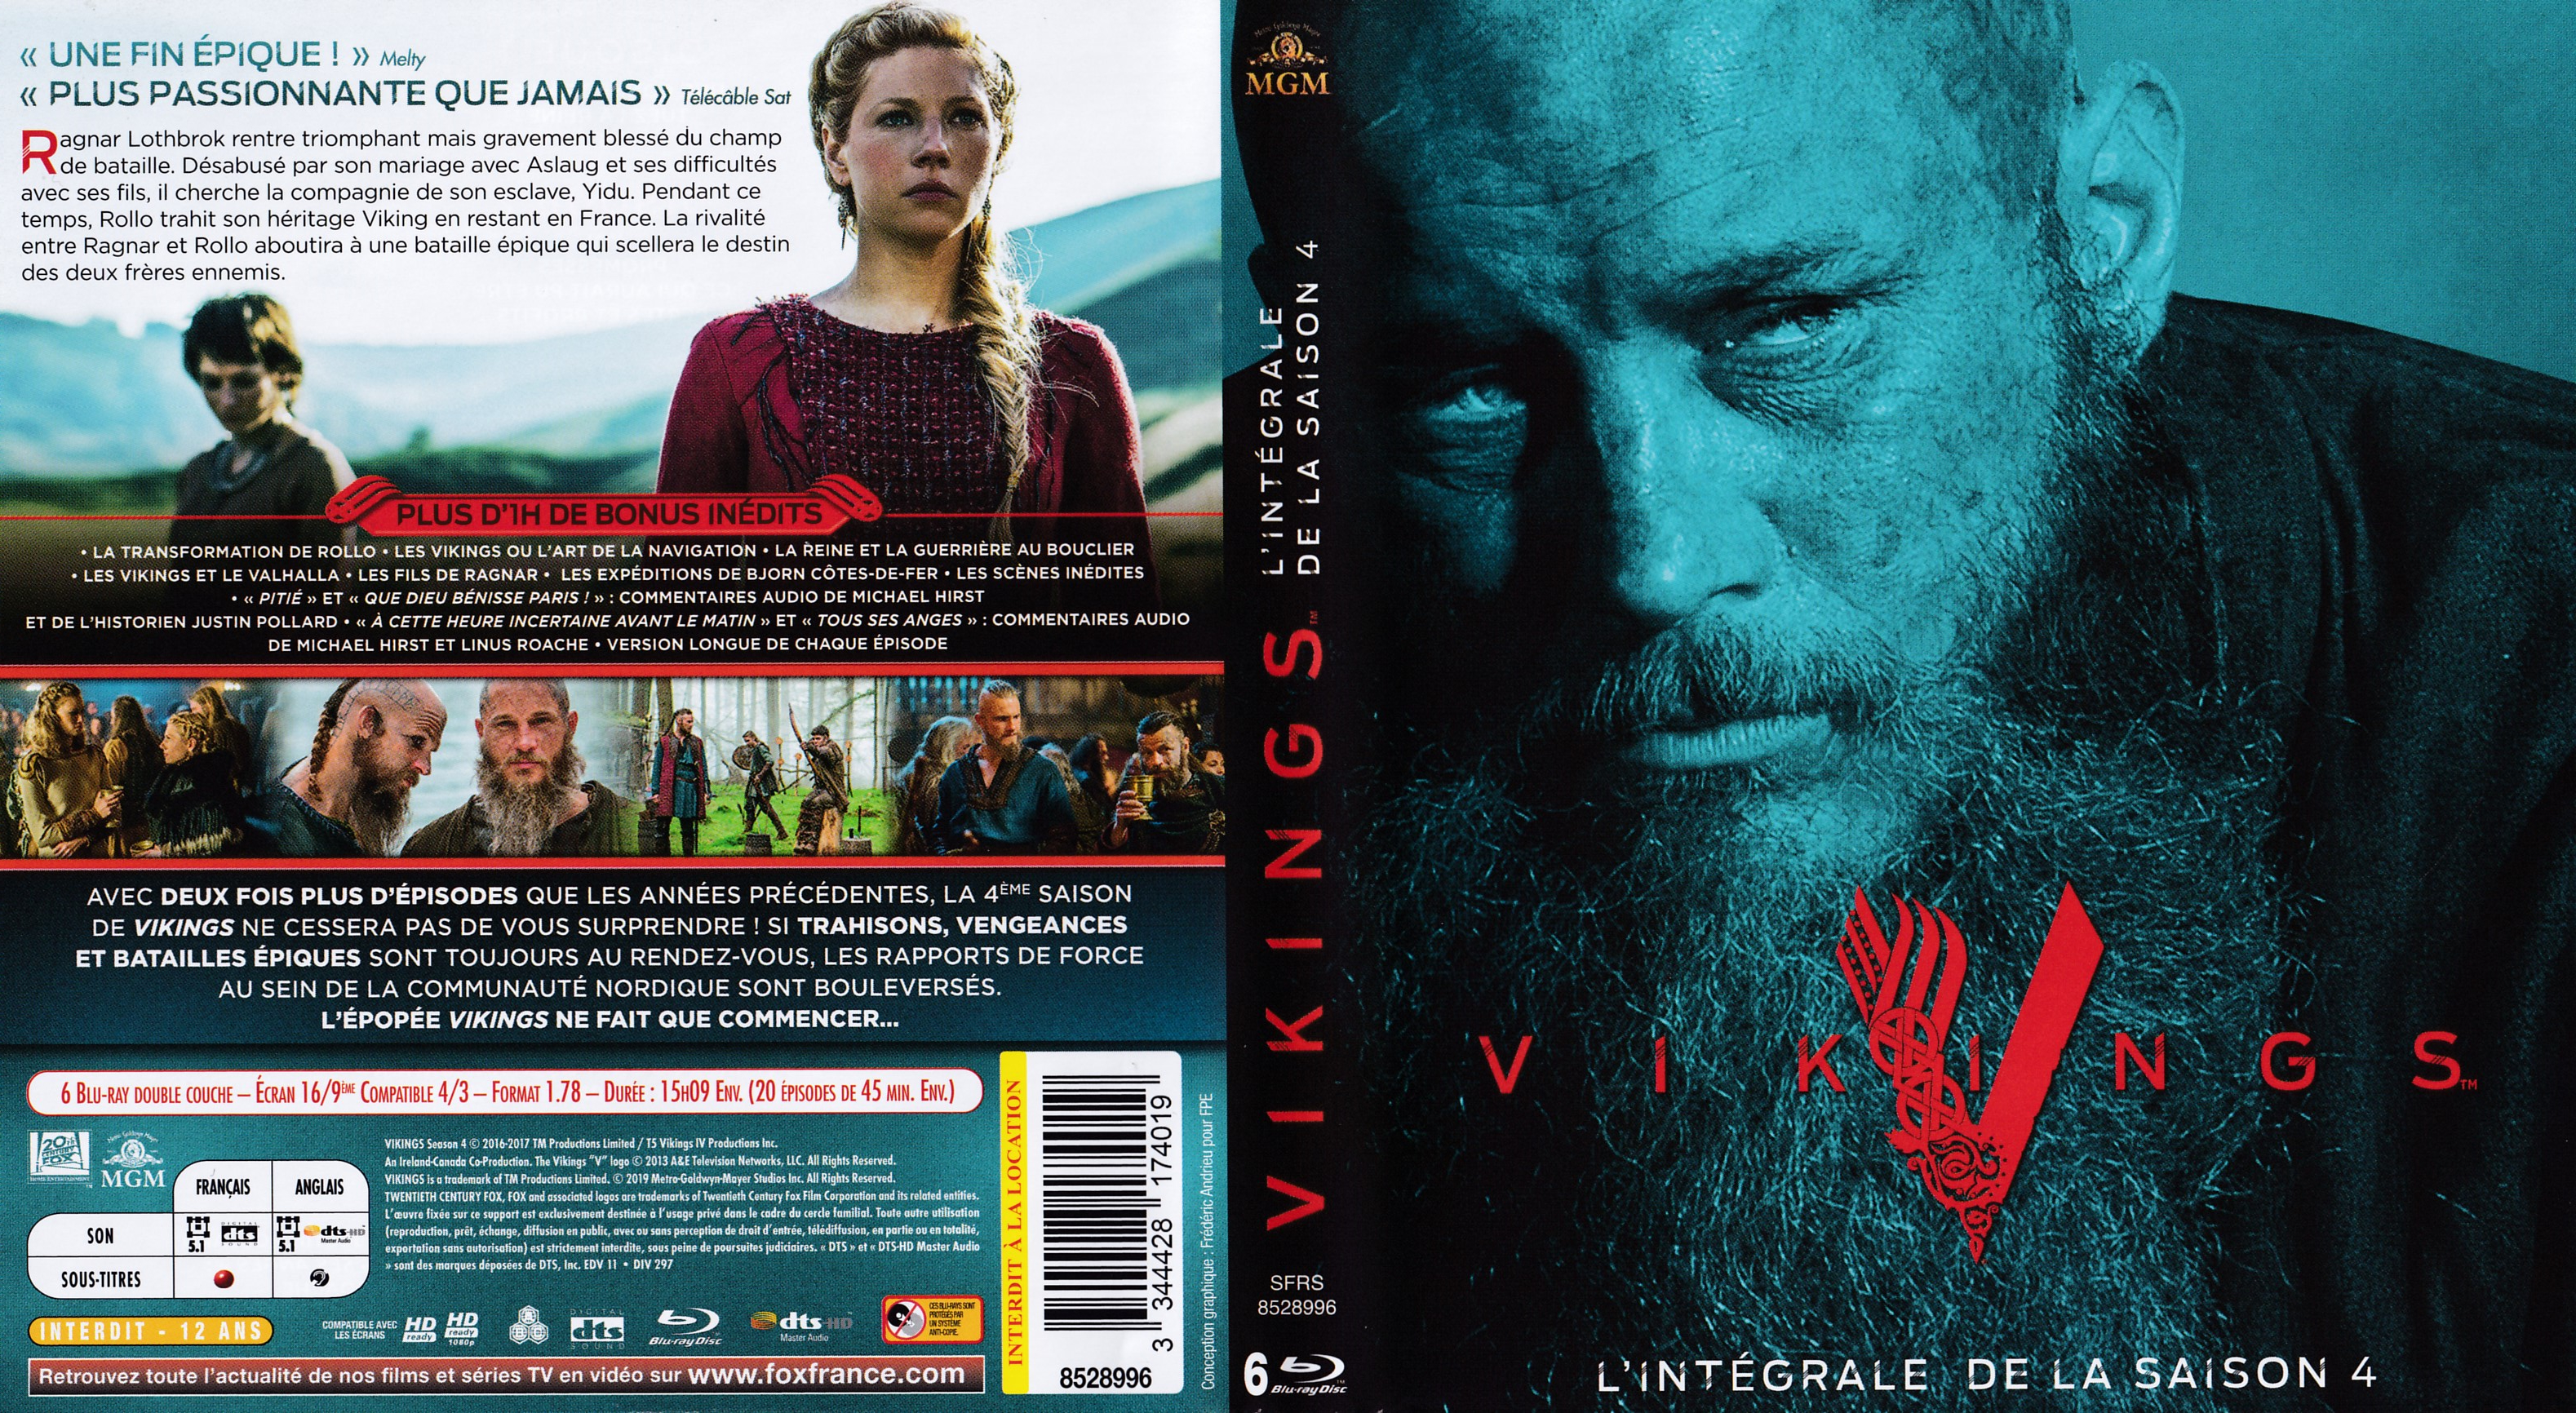 Jaquette DVD Vikings Saison 2 COFFRET (BLU-RAY)